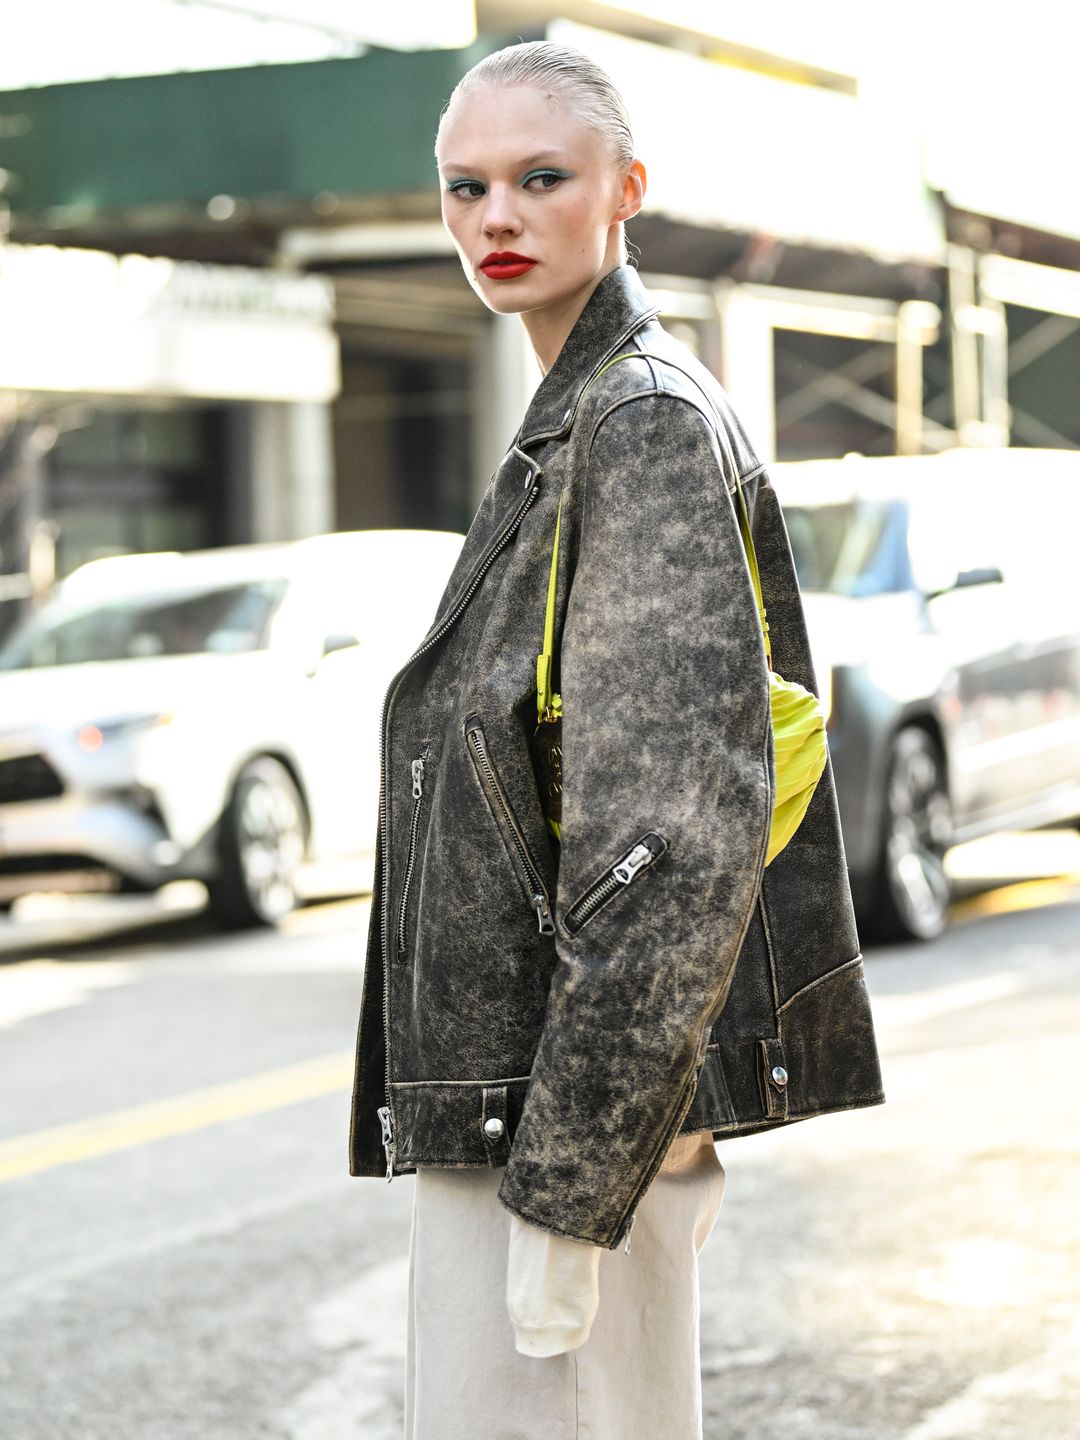 Model Vilma Sjoberg was seen wearing a Manokhi leather jacket with a lime green Loewe bag outside the Carolina Herrera show.